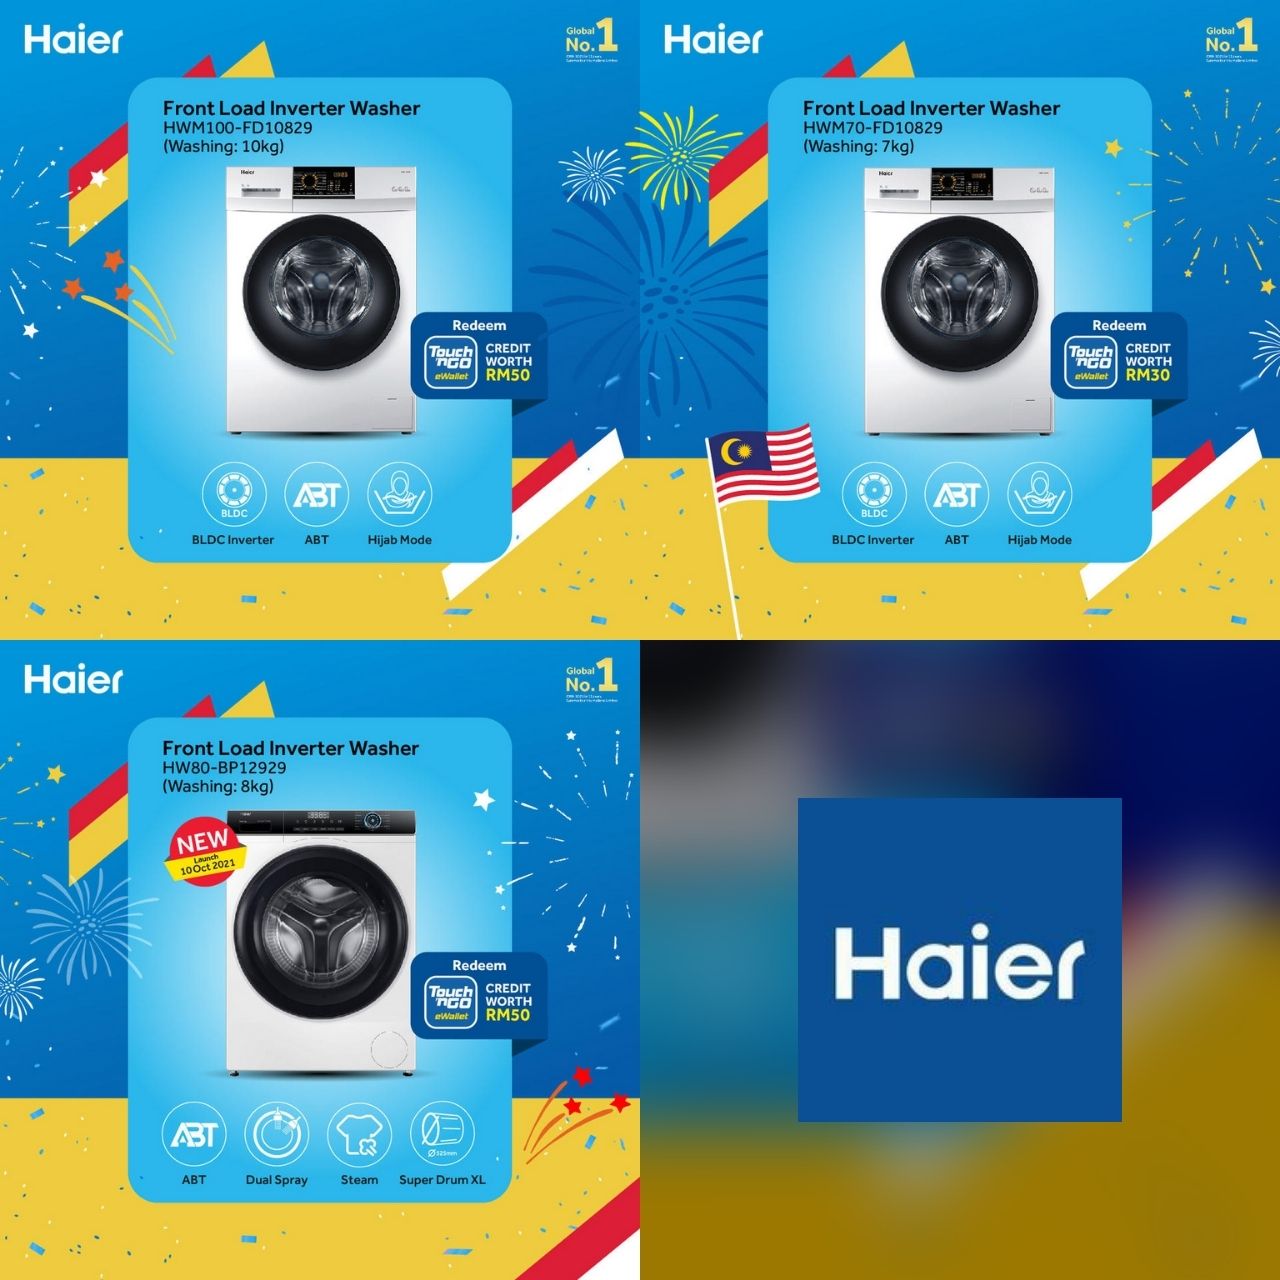 Haier Washing Machine Malaysia Day Deals